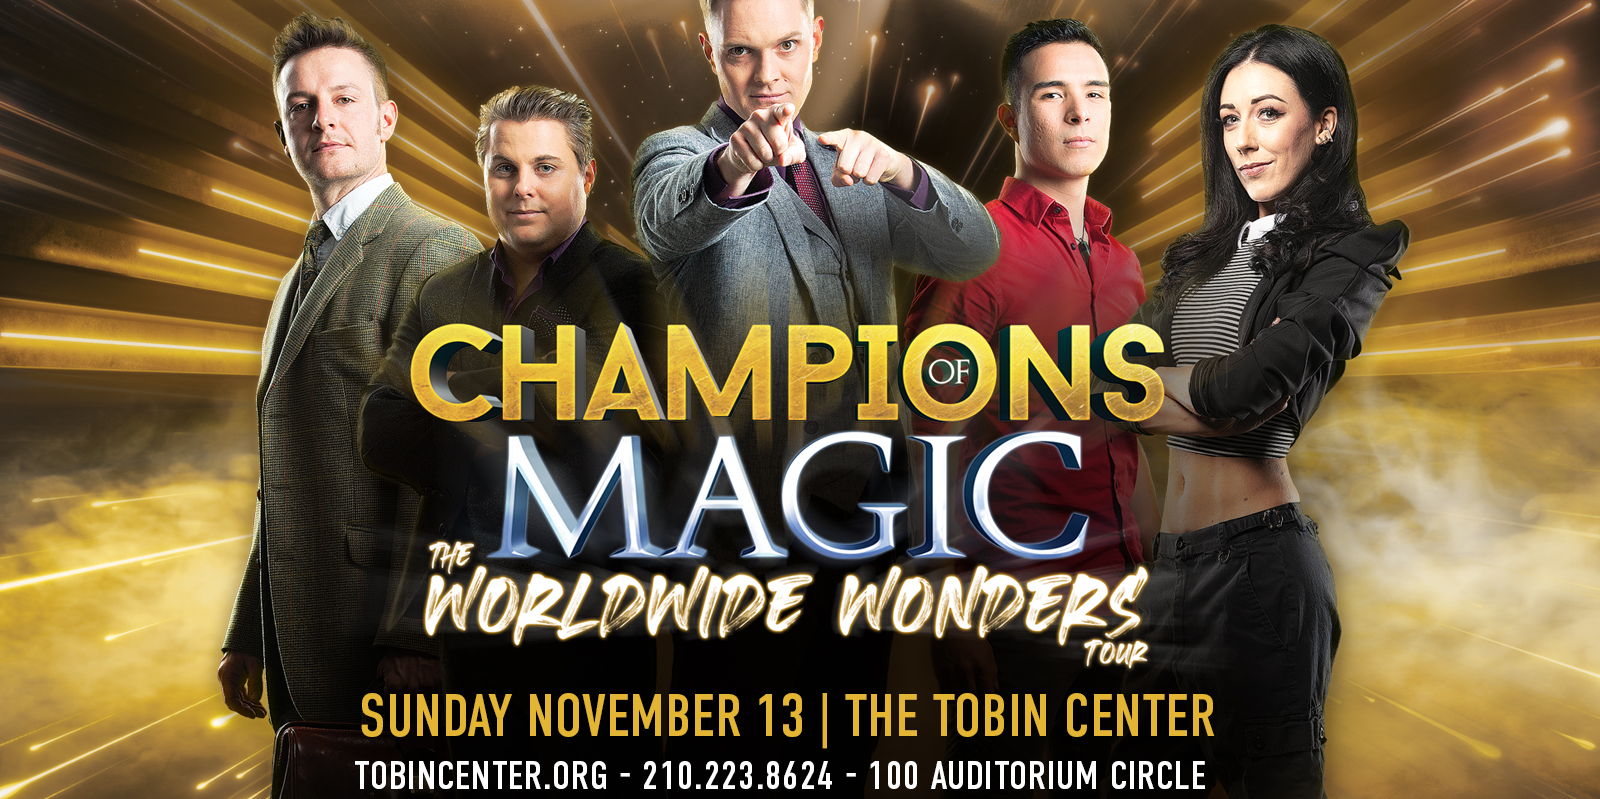 Champions of Magic promotional image